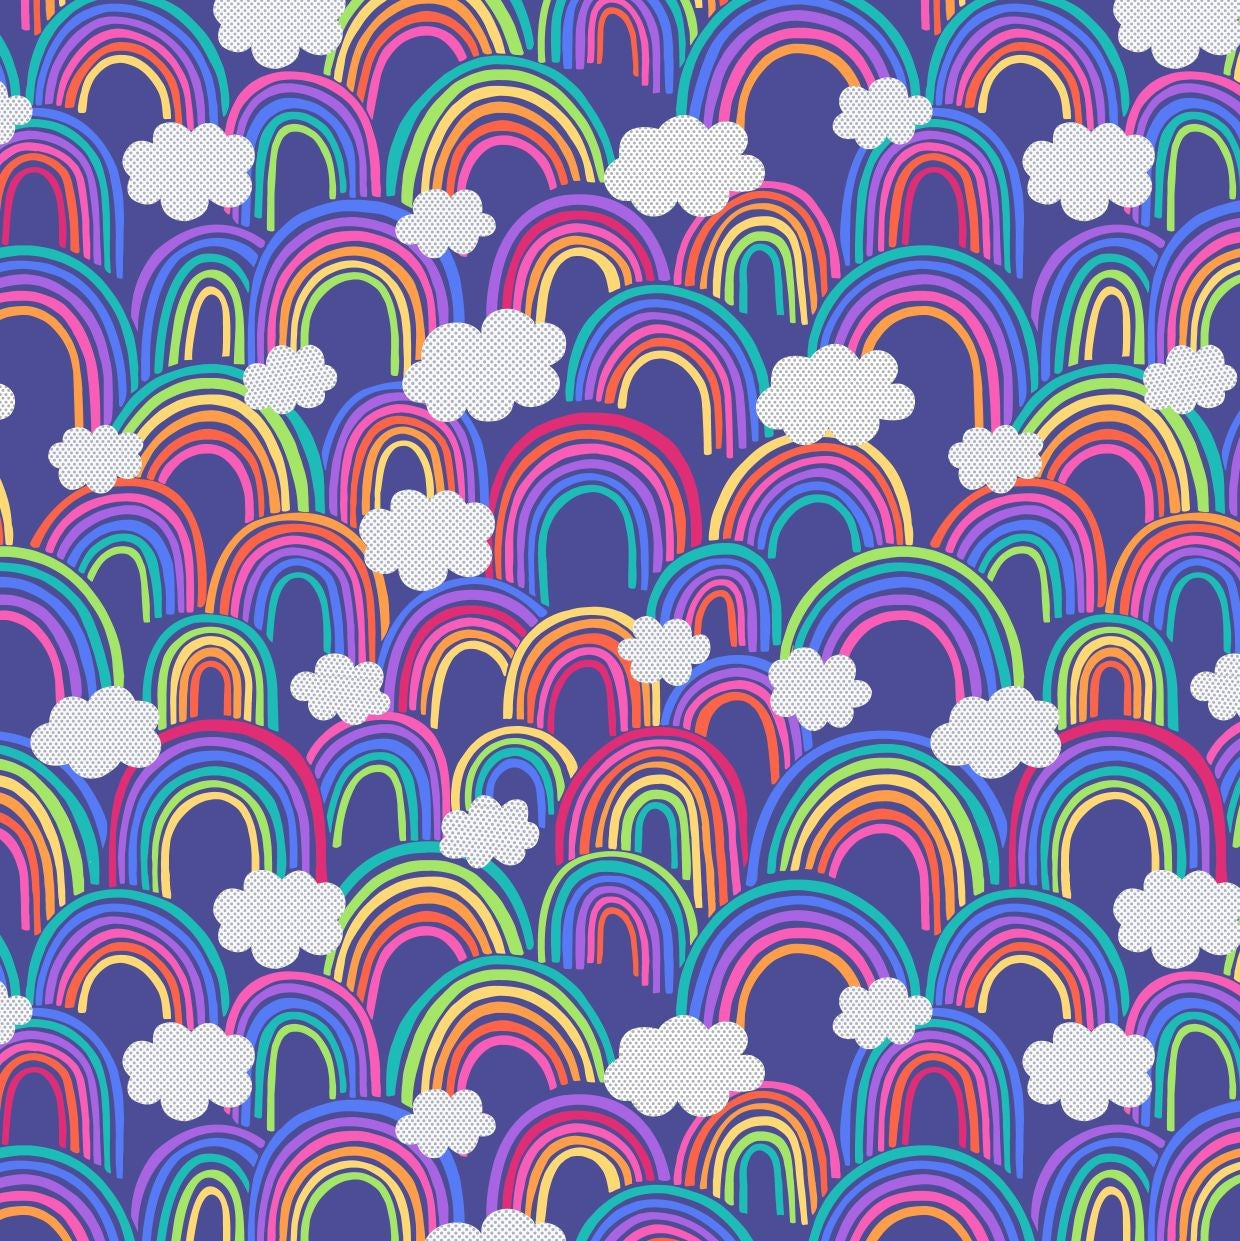 Weather/Rainbow Fabrics